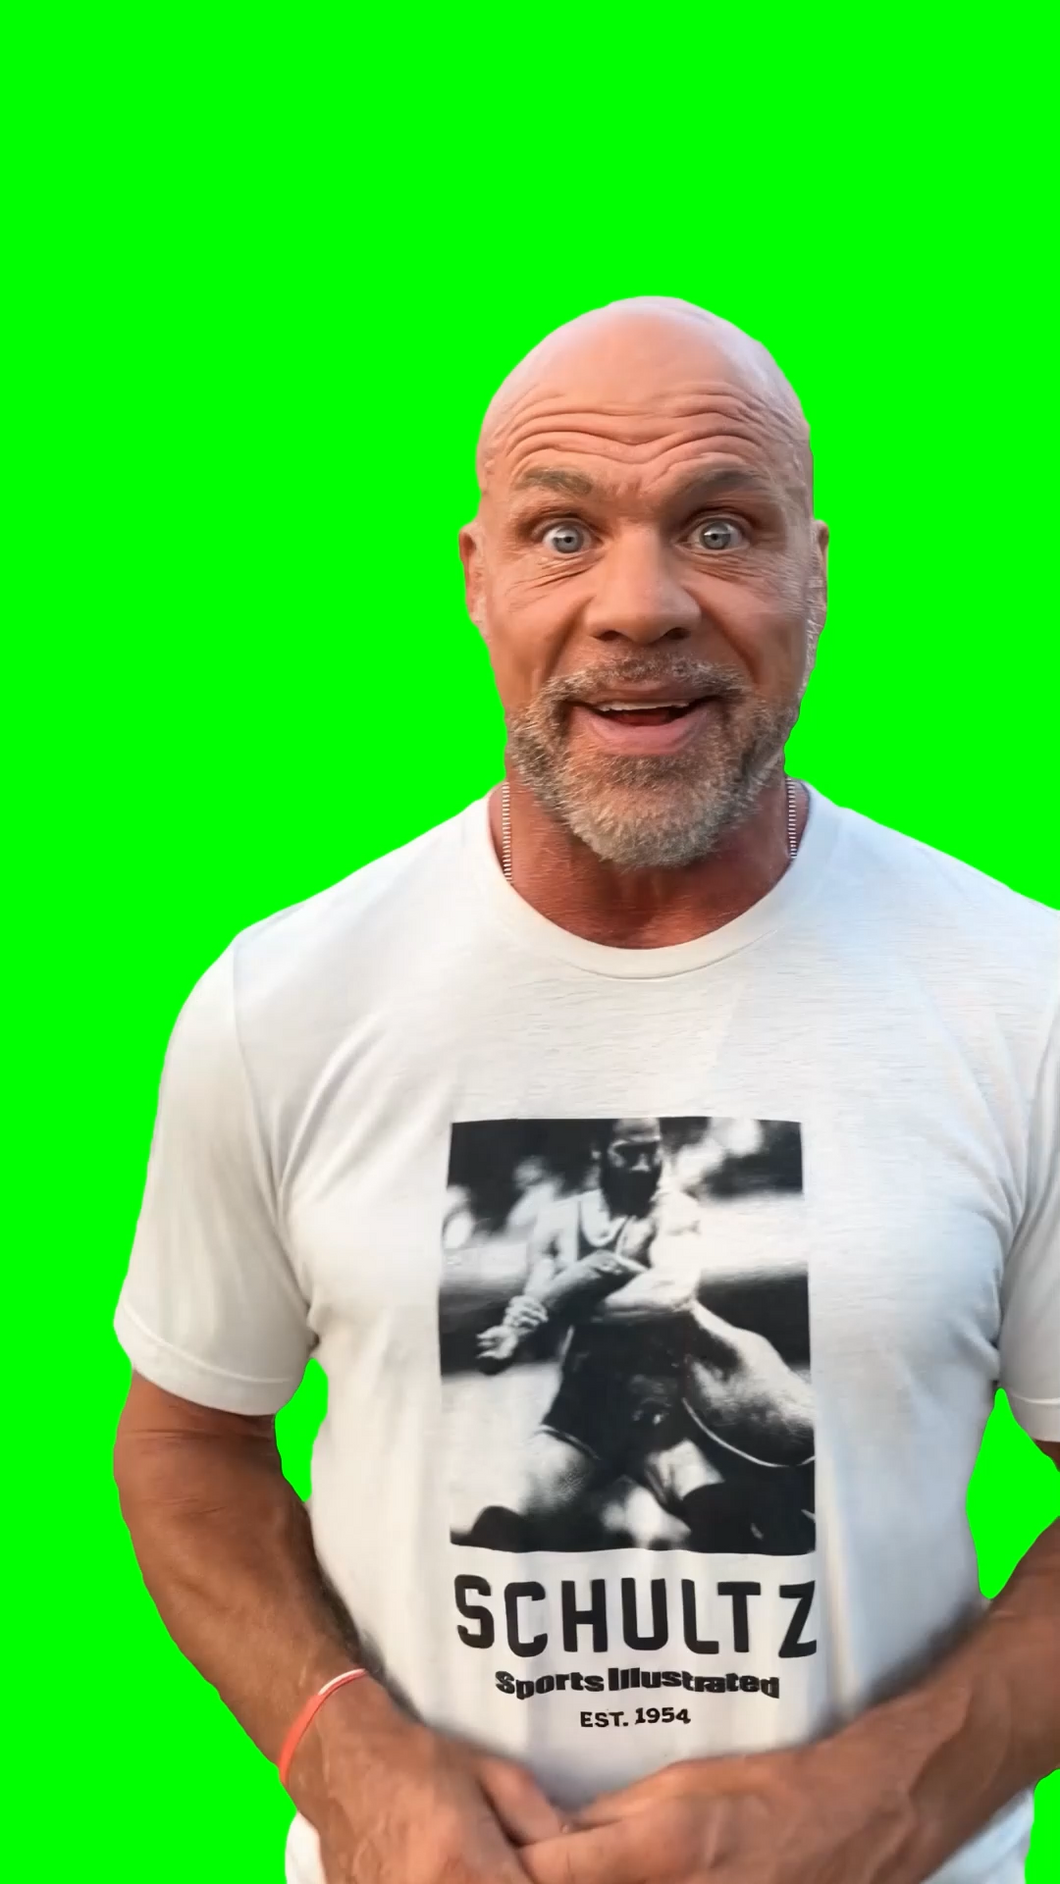 Kurt Angle Thousand Yard Stare - Bald bearded staring guy TikTok meme (Green Screen)